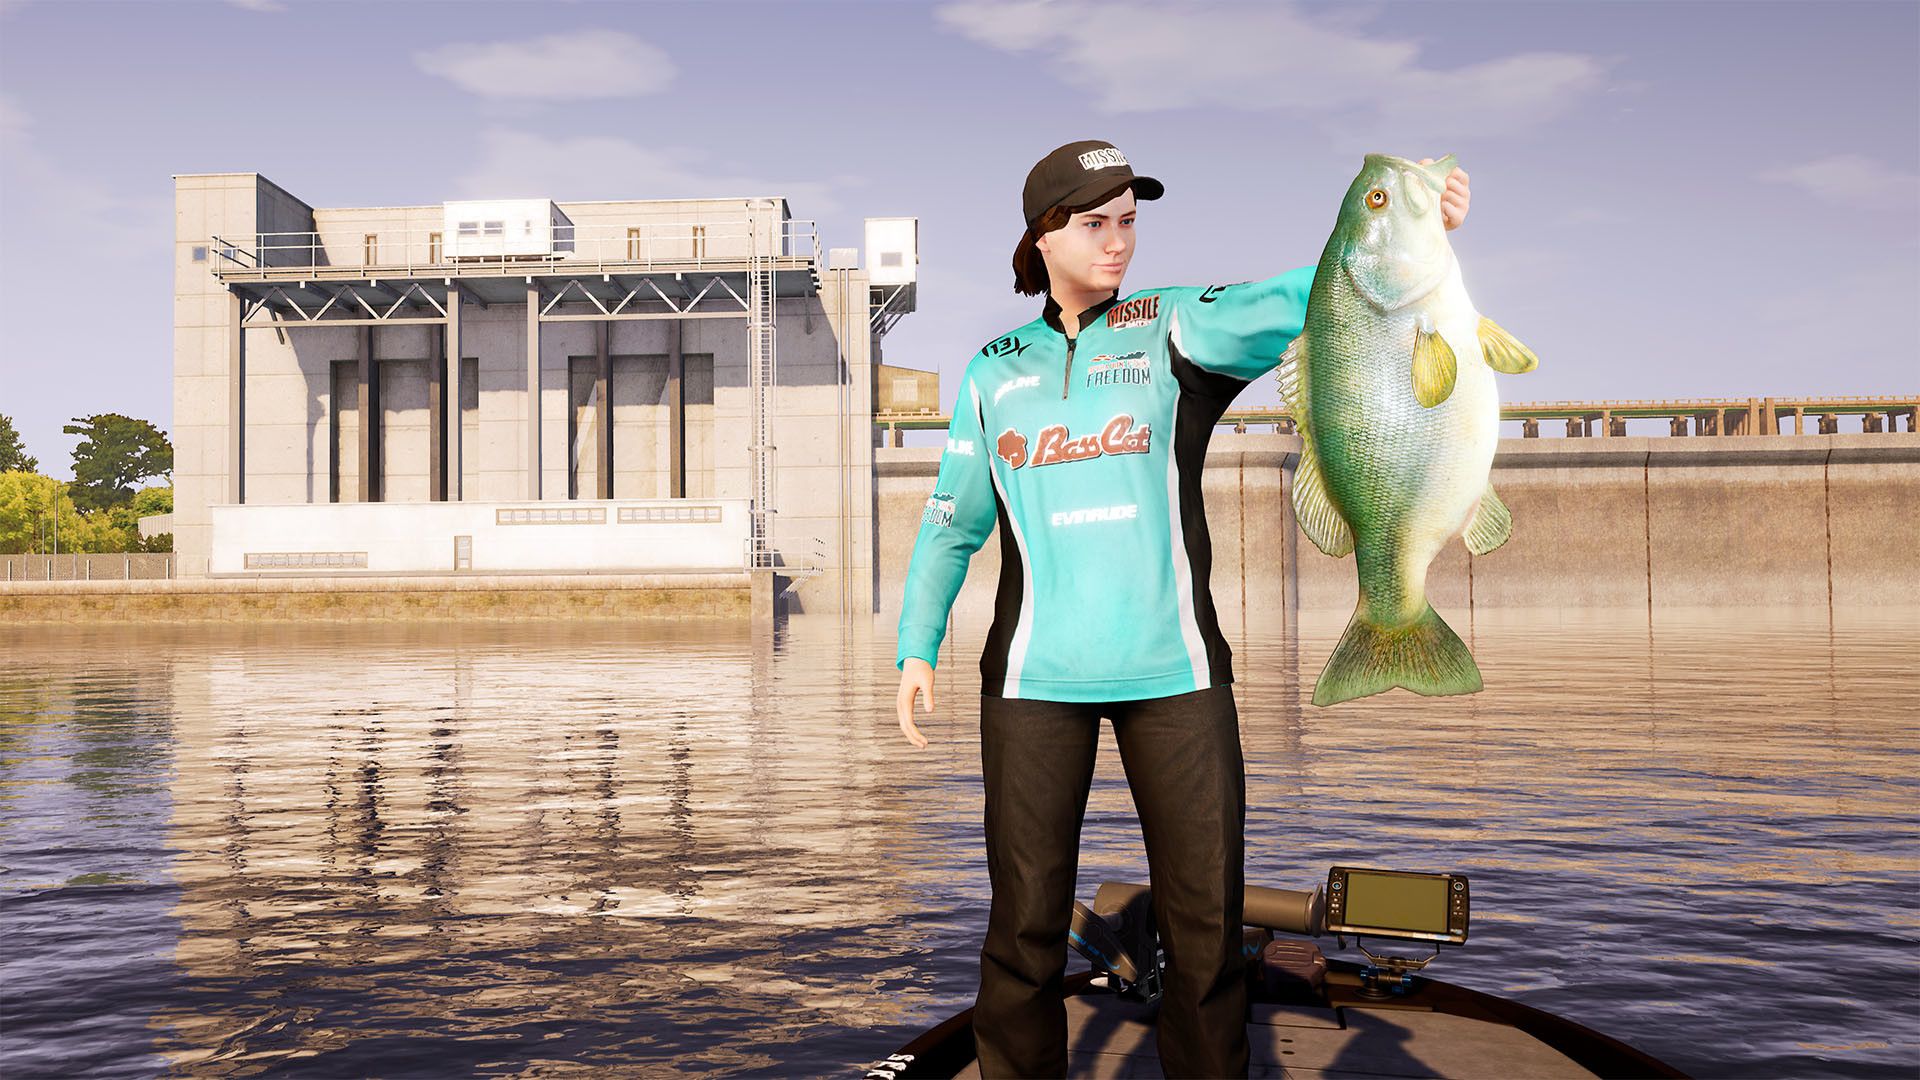 Fishing Sim World: Pro Tour - Tournament Bass Pack